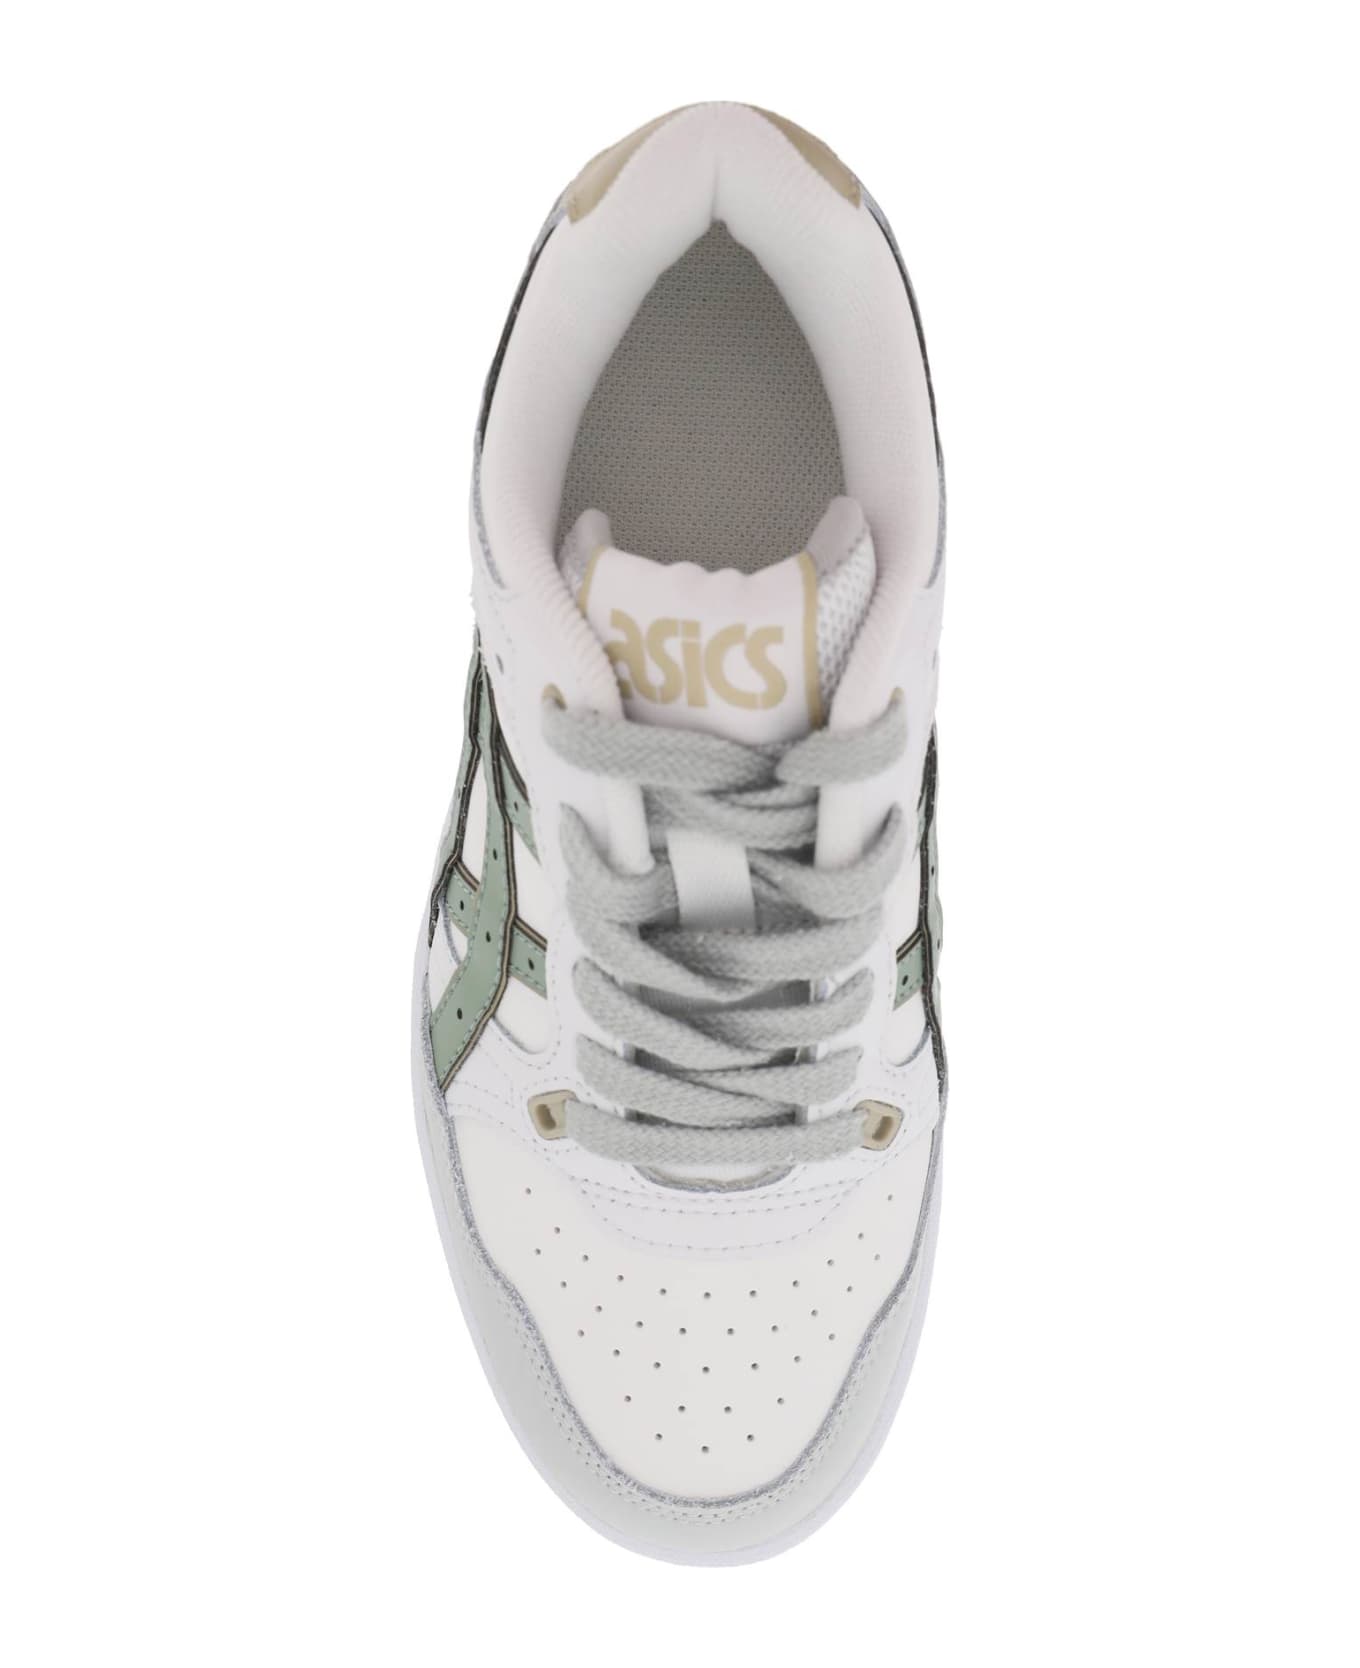 Asics Ex89 Sneakers - WHITE SLATE GREY (White)